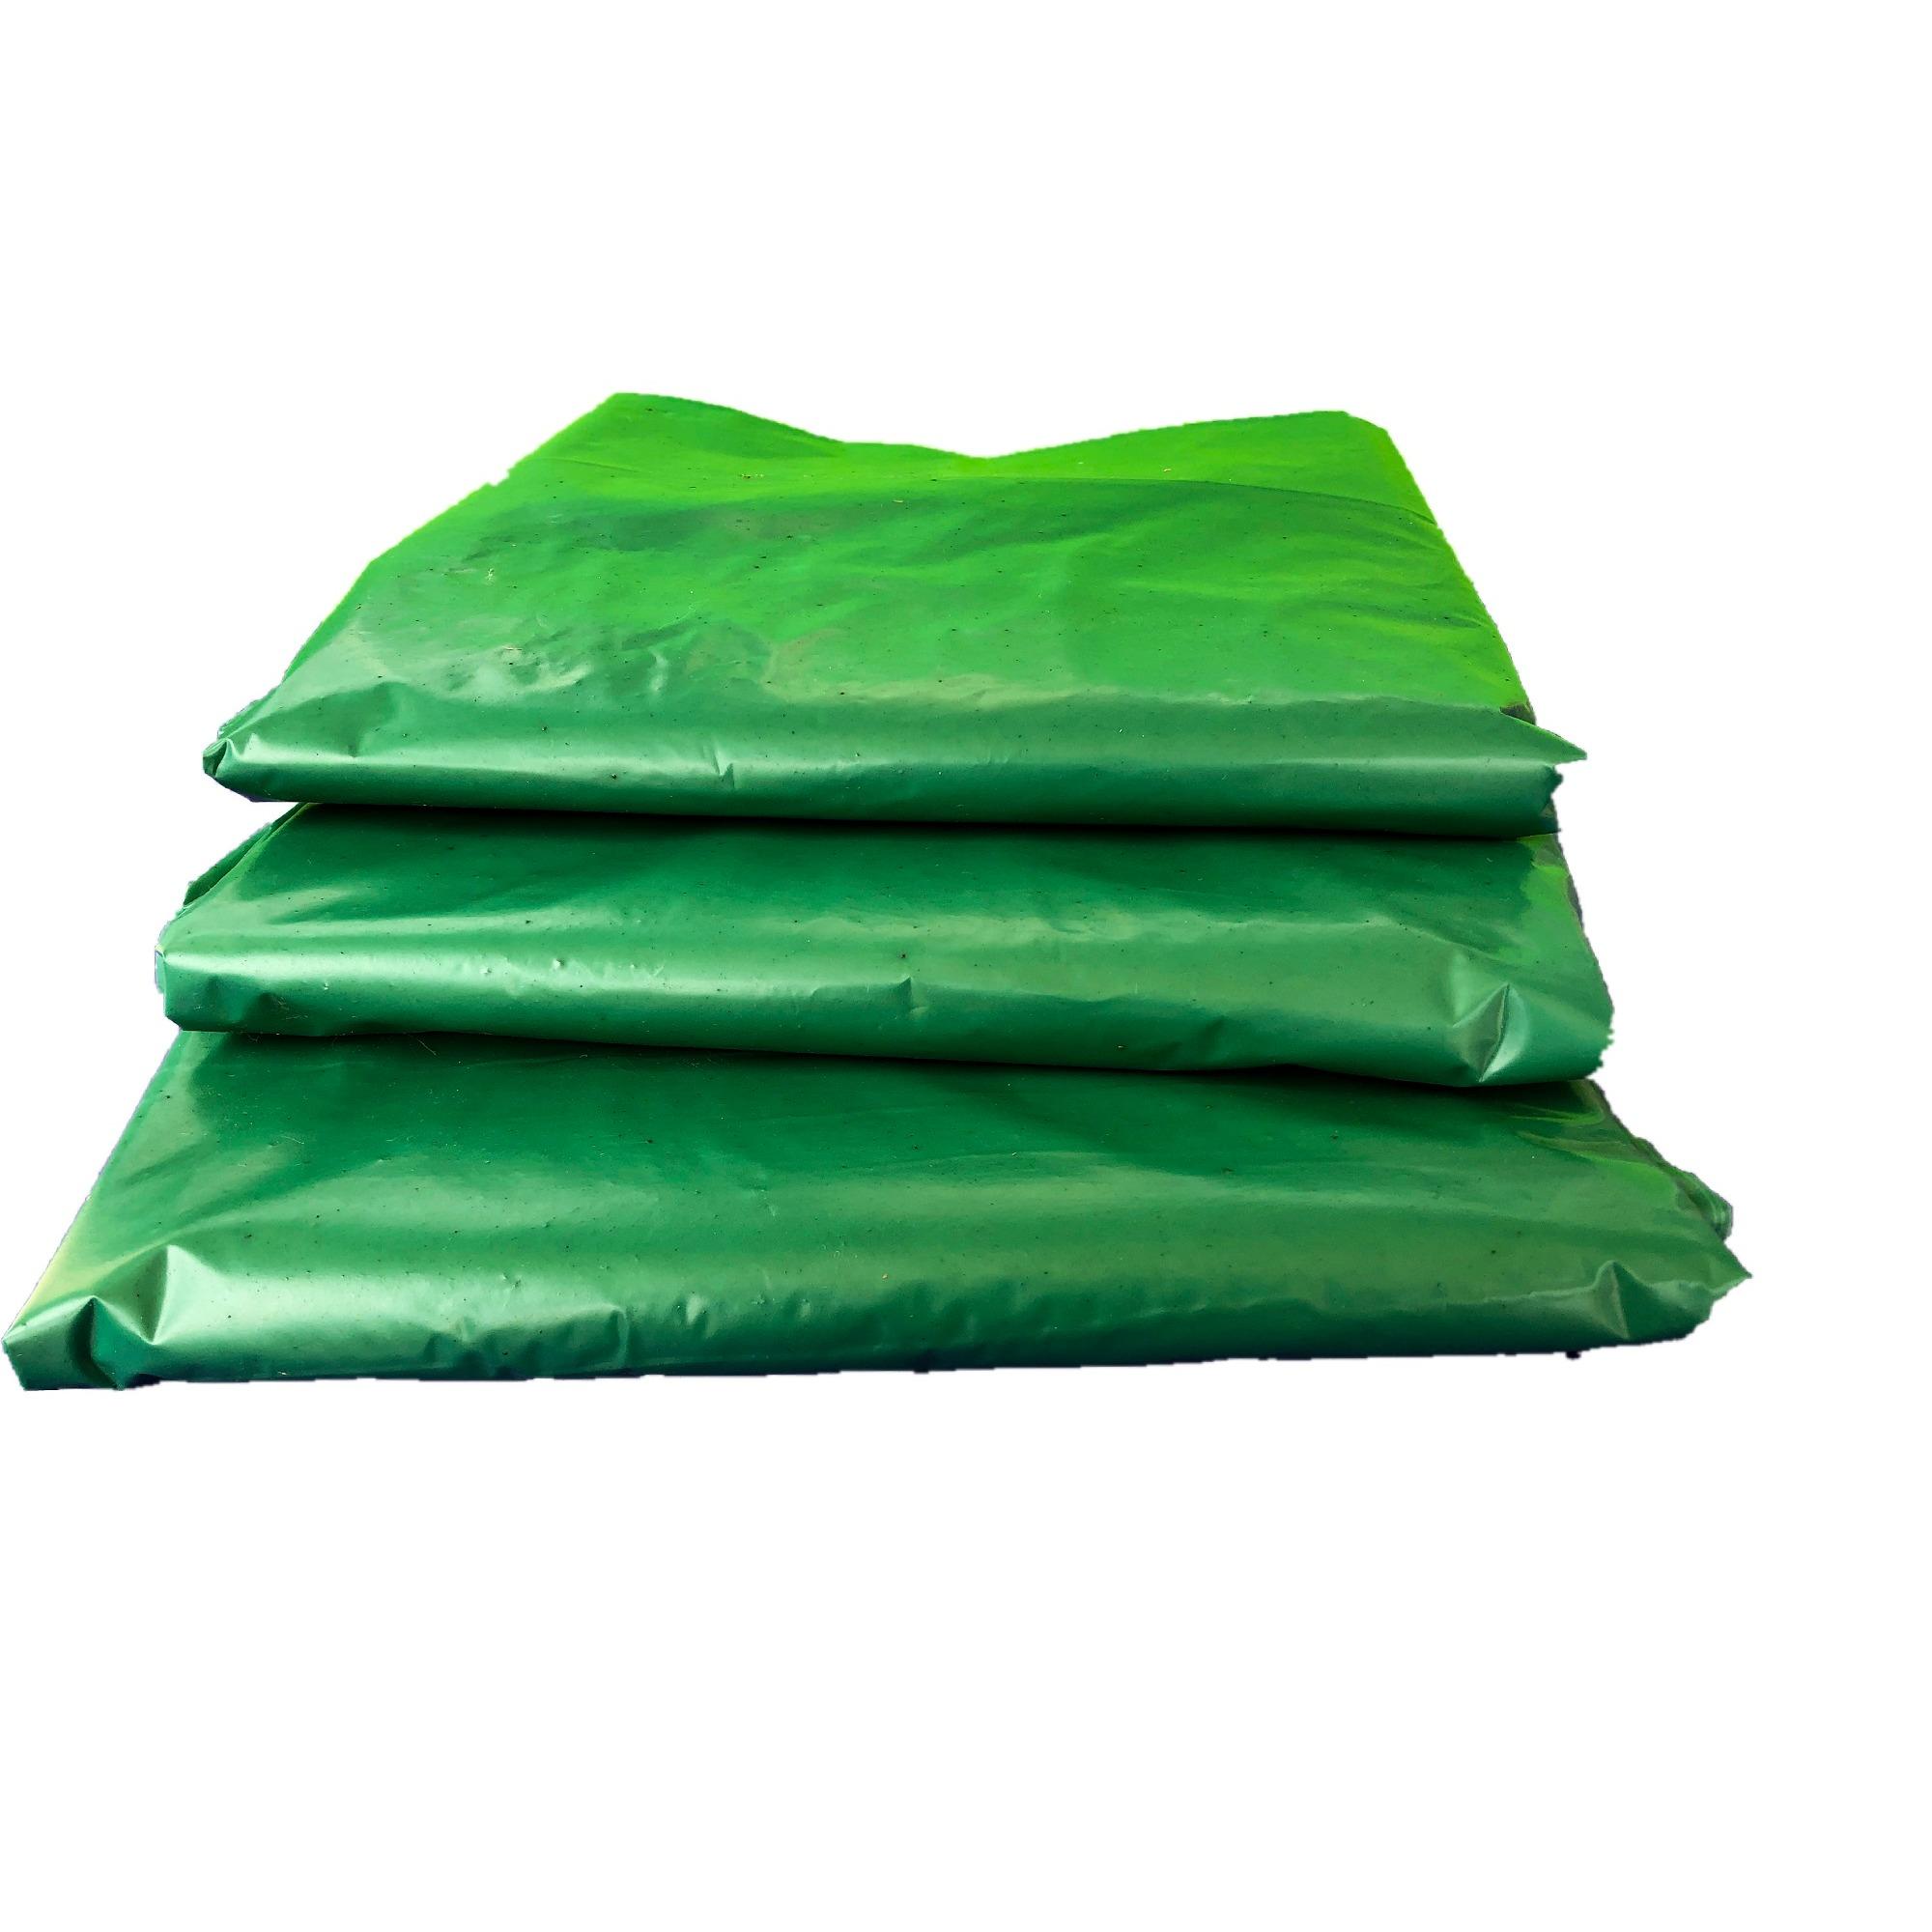 M_F ถุงขยะสีเขียว ขนาด 30 นิ้ว X 40 นิ้ว (1kg)